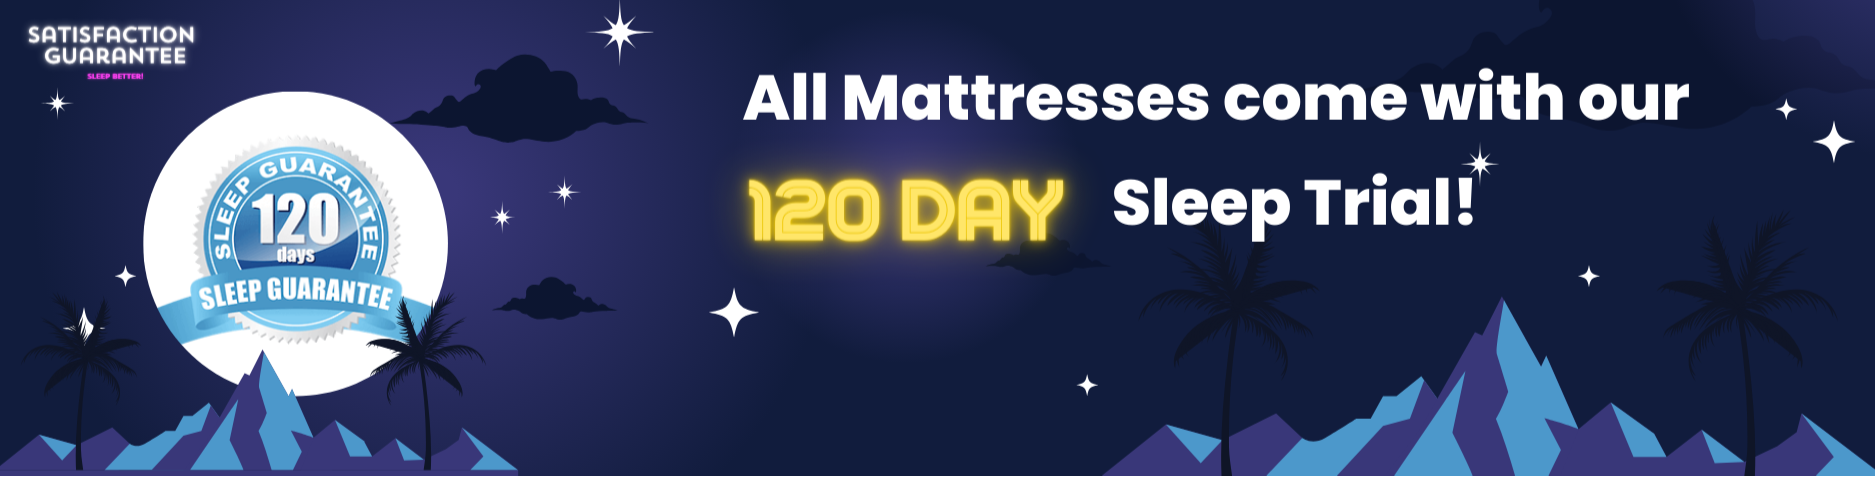 120 day/night sleep trial